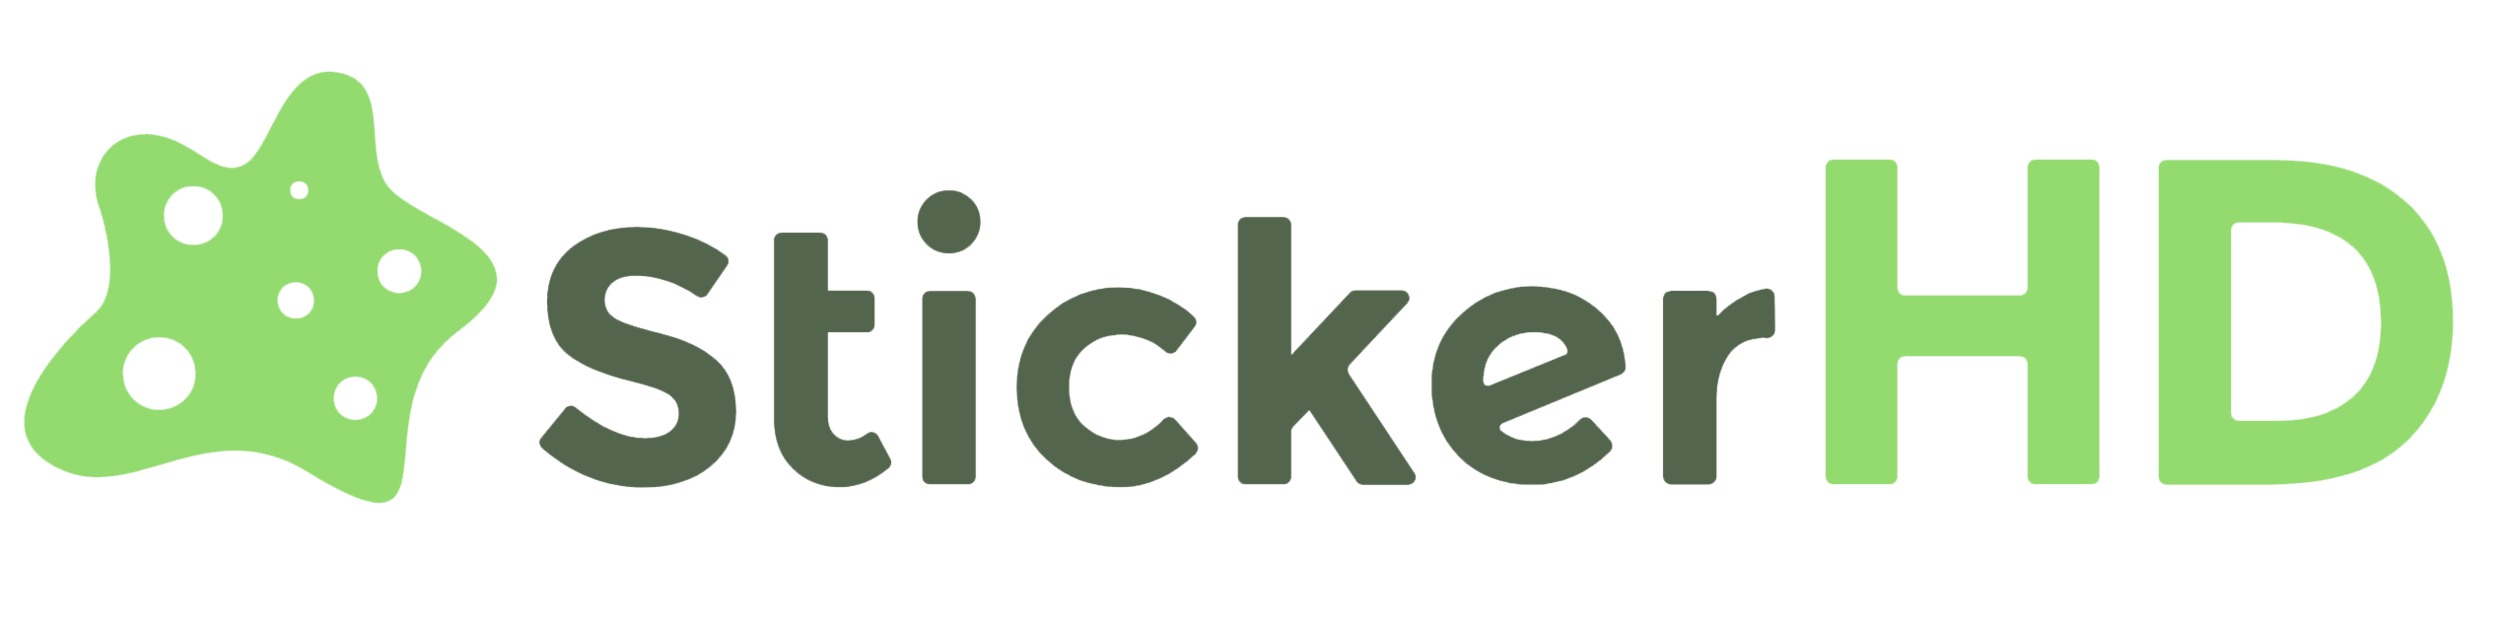 stickerHD logo.png